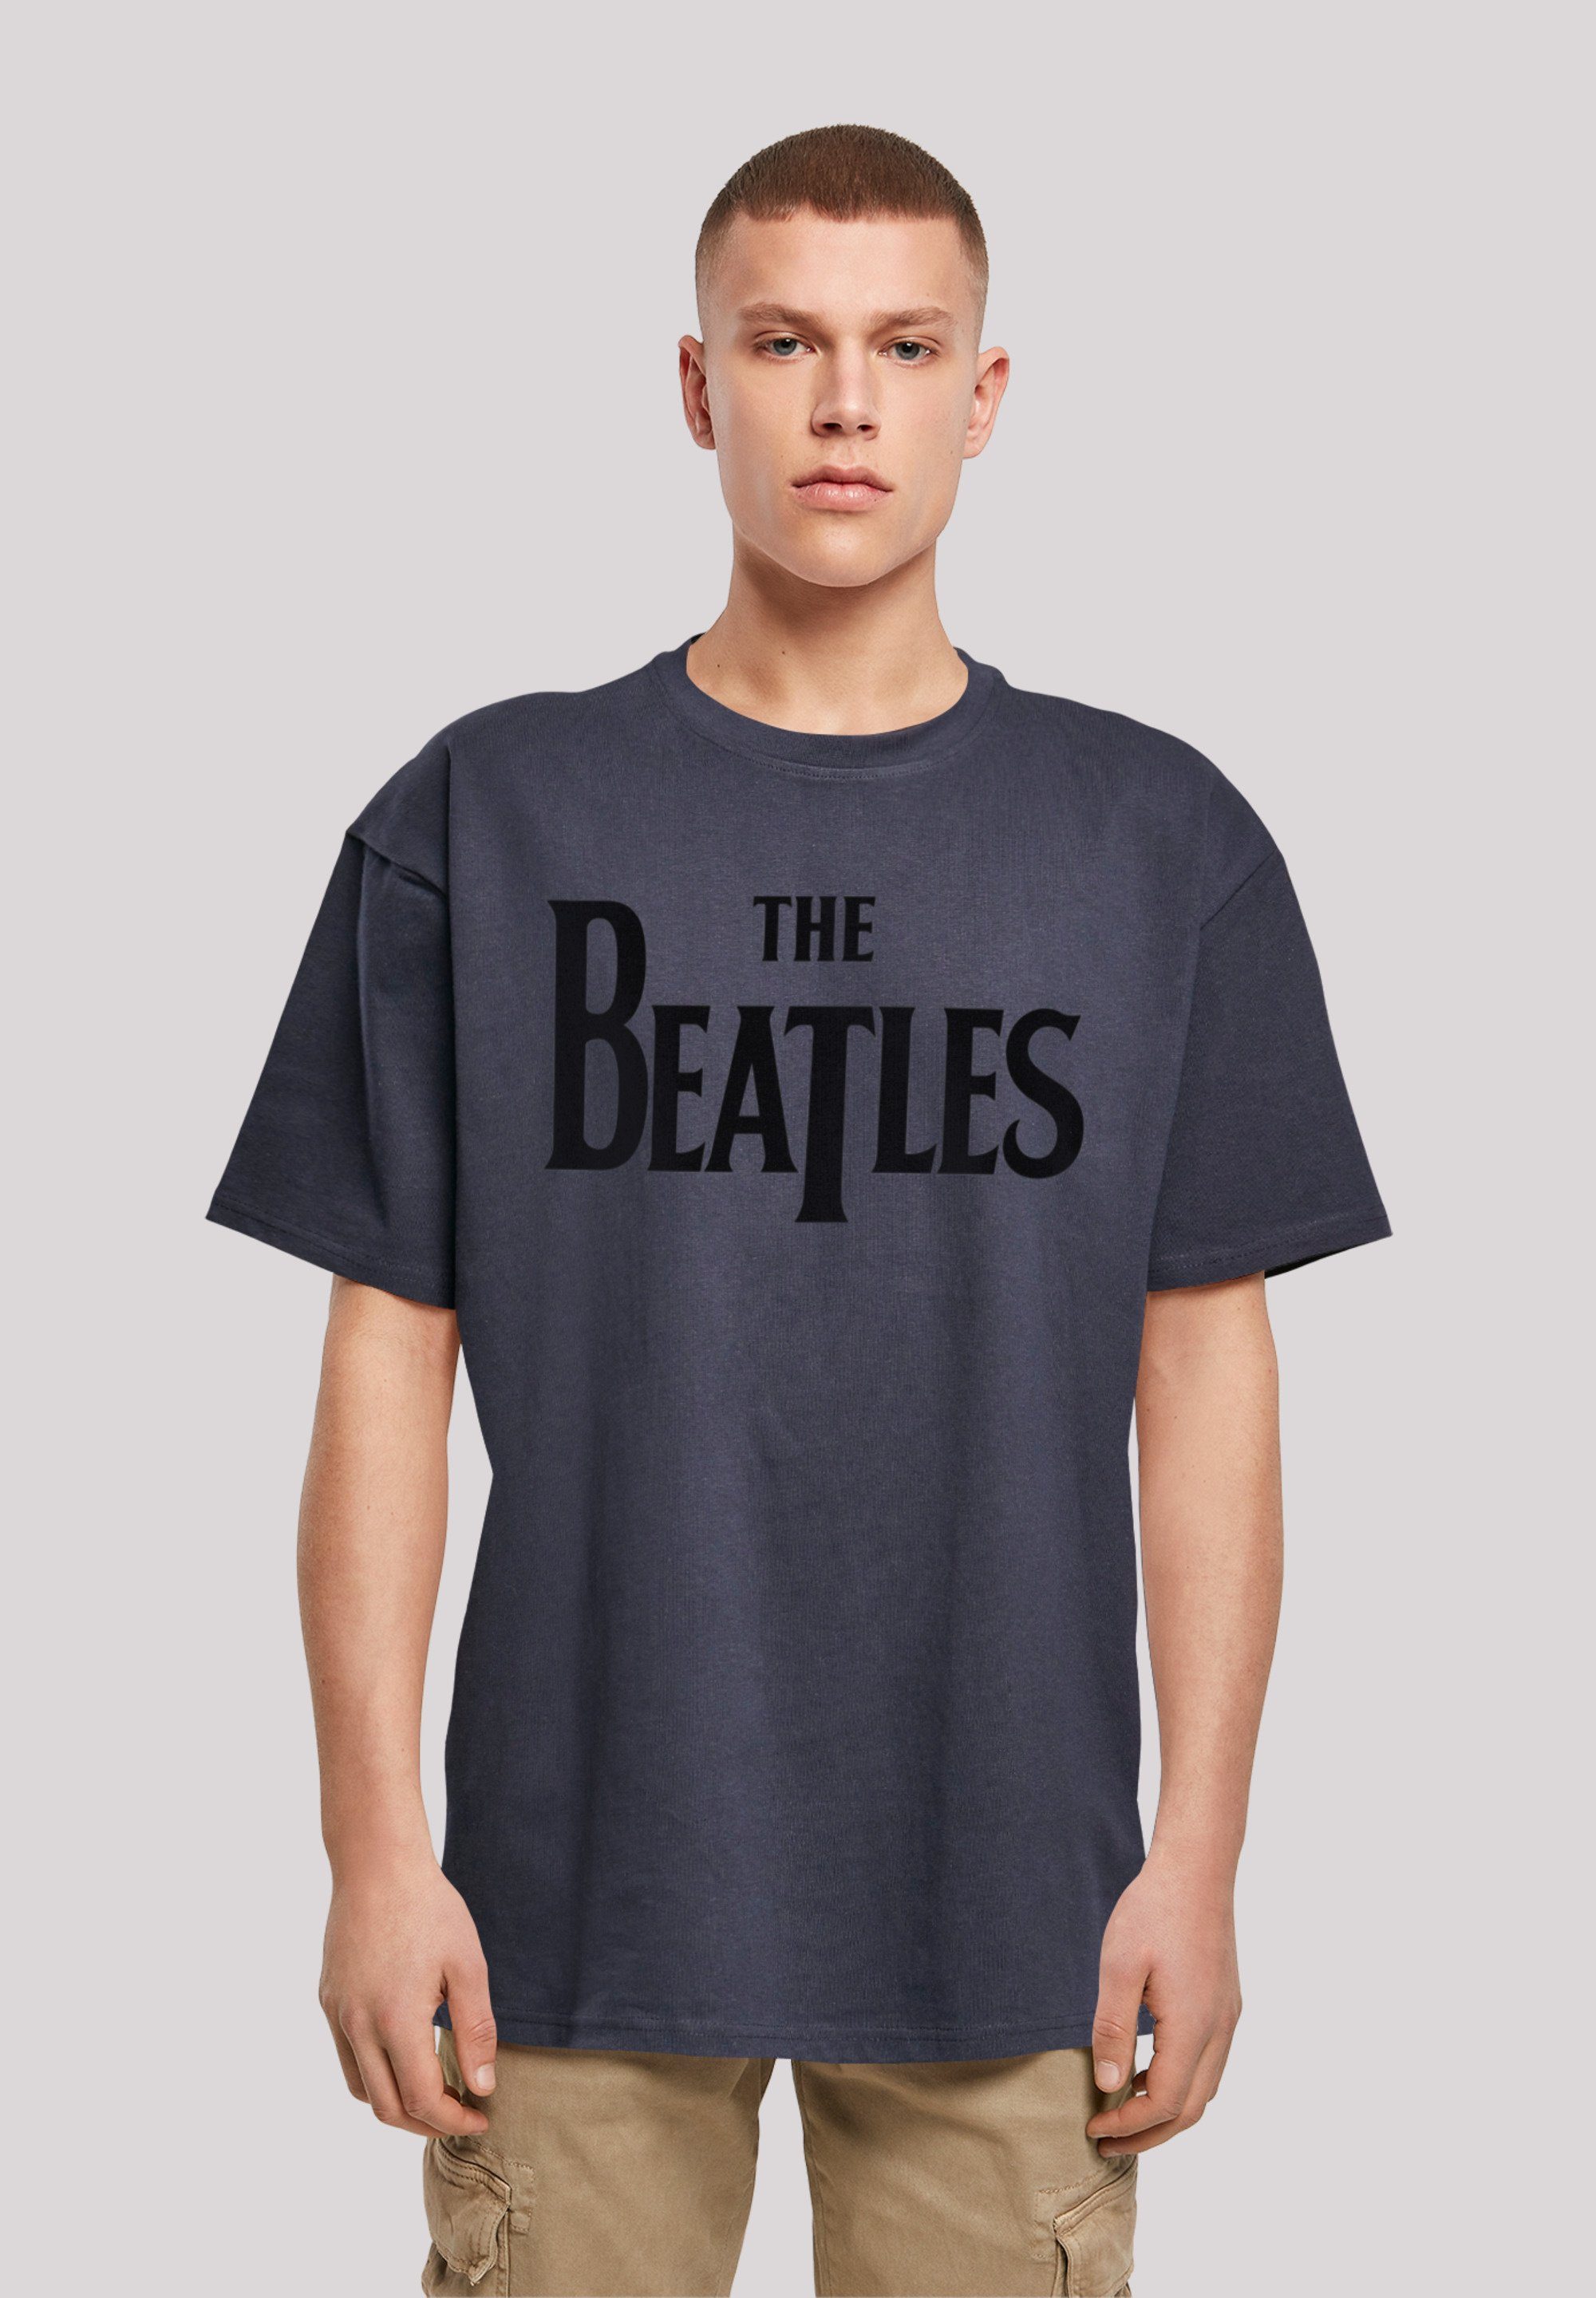 Black navy Logo F4NT4STIC Band Beatles Print The T-Shirt T Drop